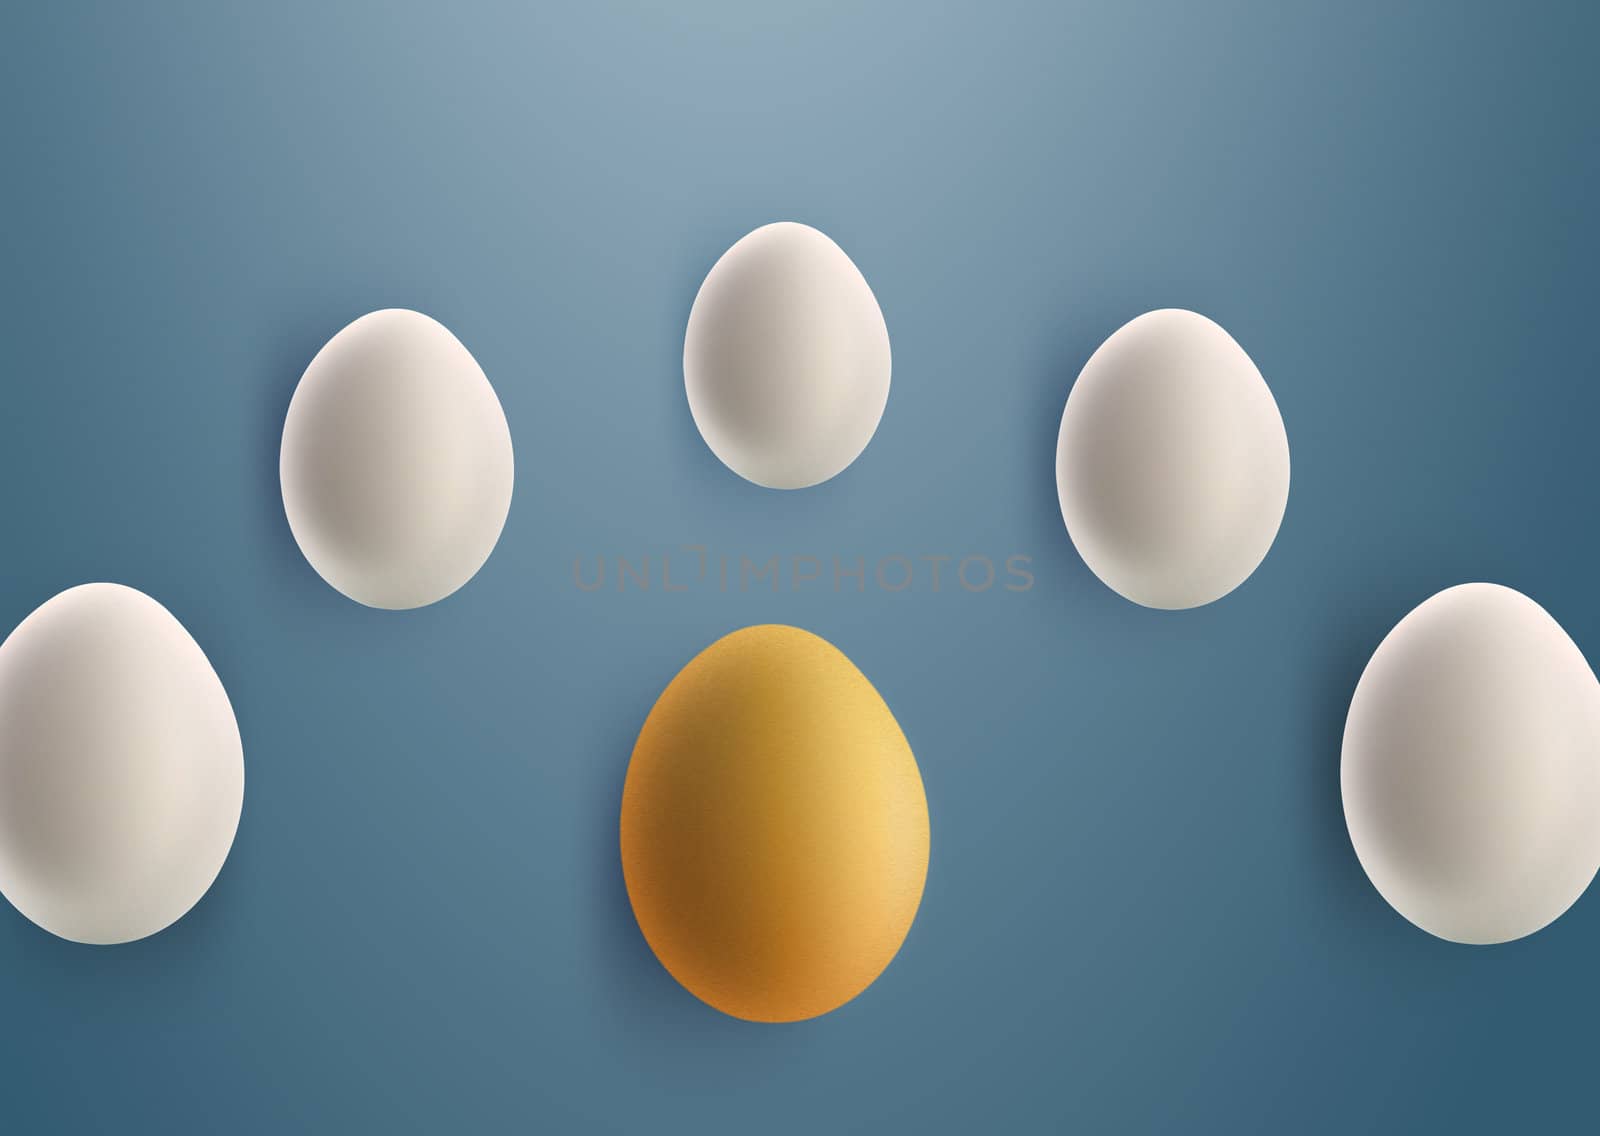 unique golden egg between white eggs by designsstock